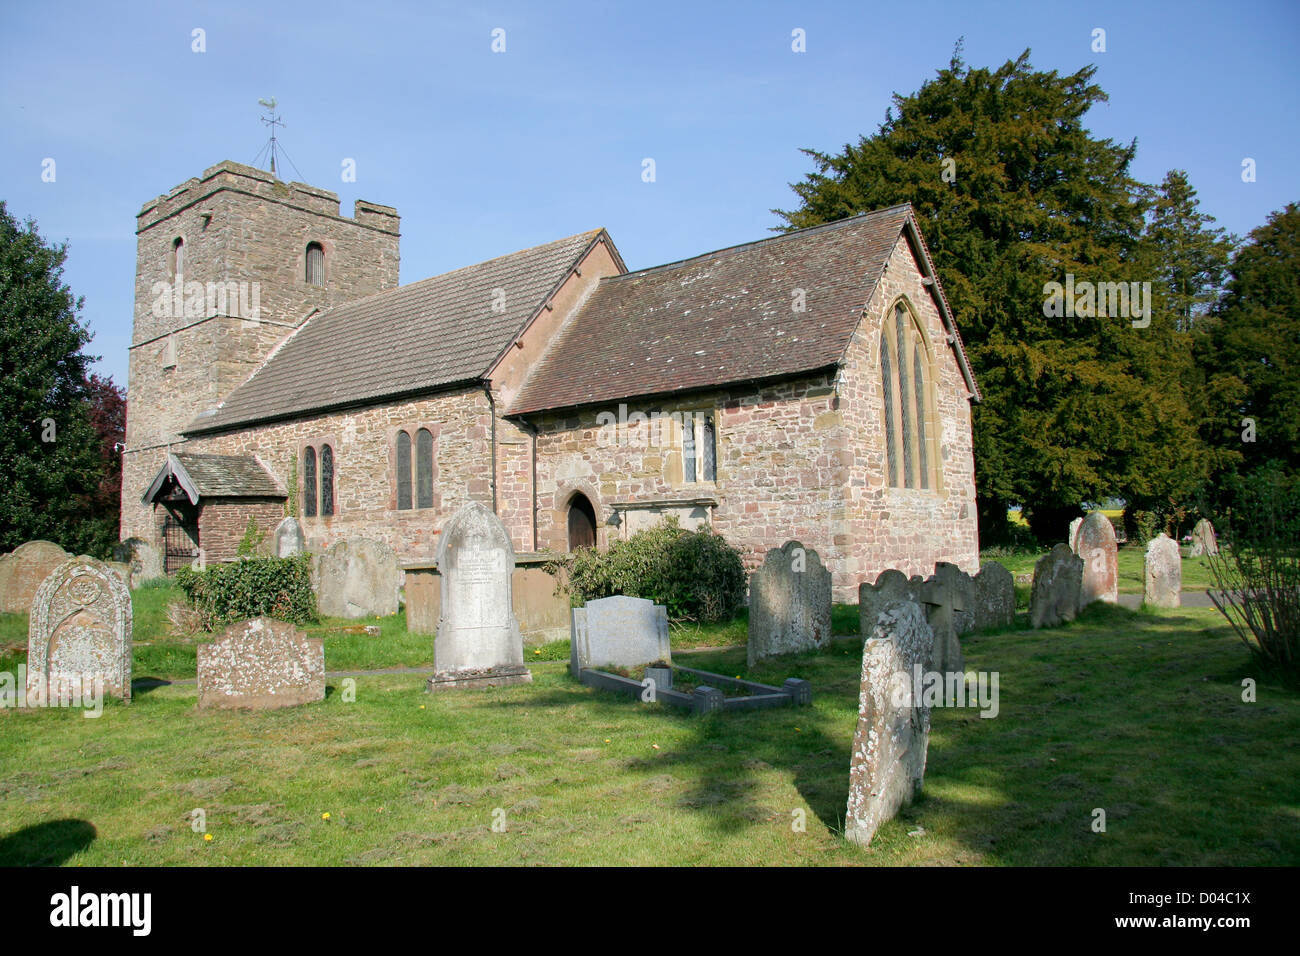 St John the Baptist Church Stokesay Shropshire England UK Banque D'Images